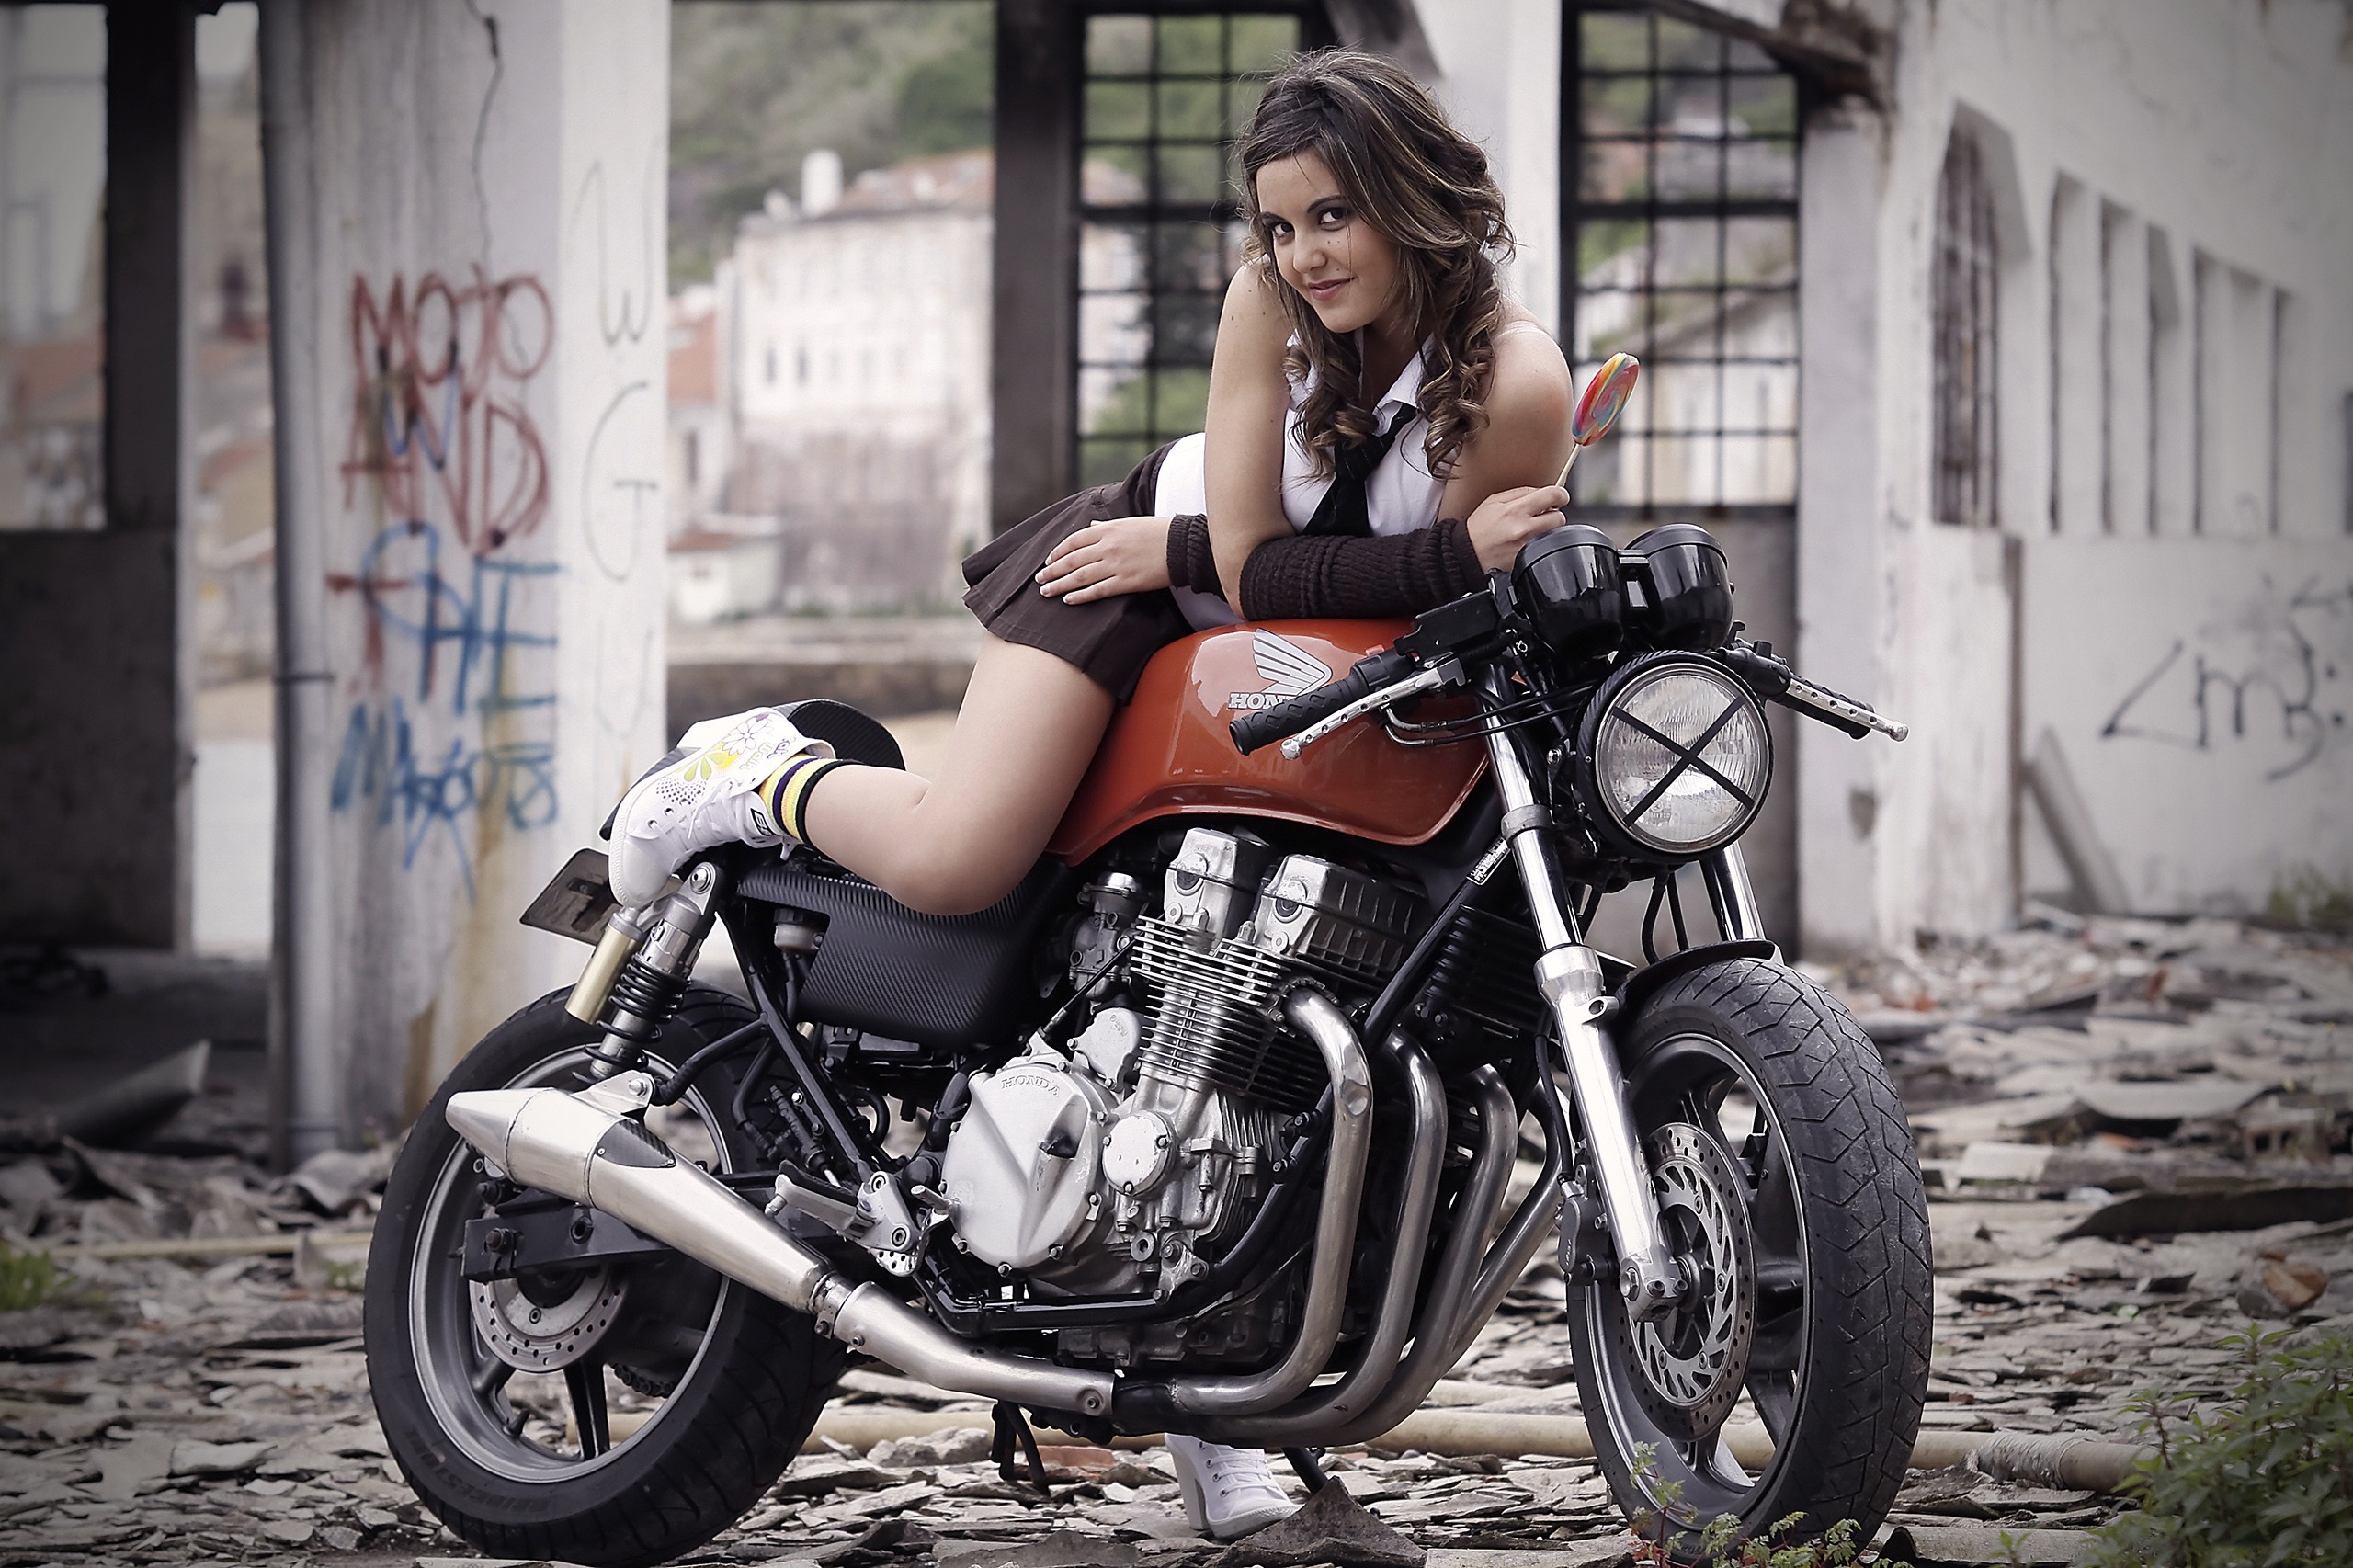 motorcycle girl wallpaper,land vehicle,vehicle,motorcycle,motor vehicle,beauty